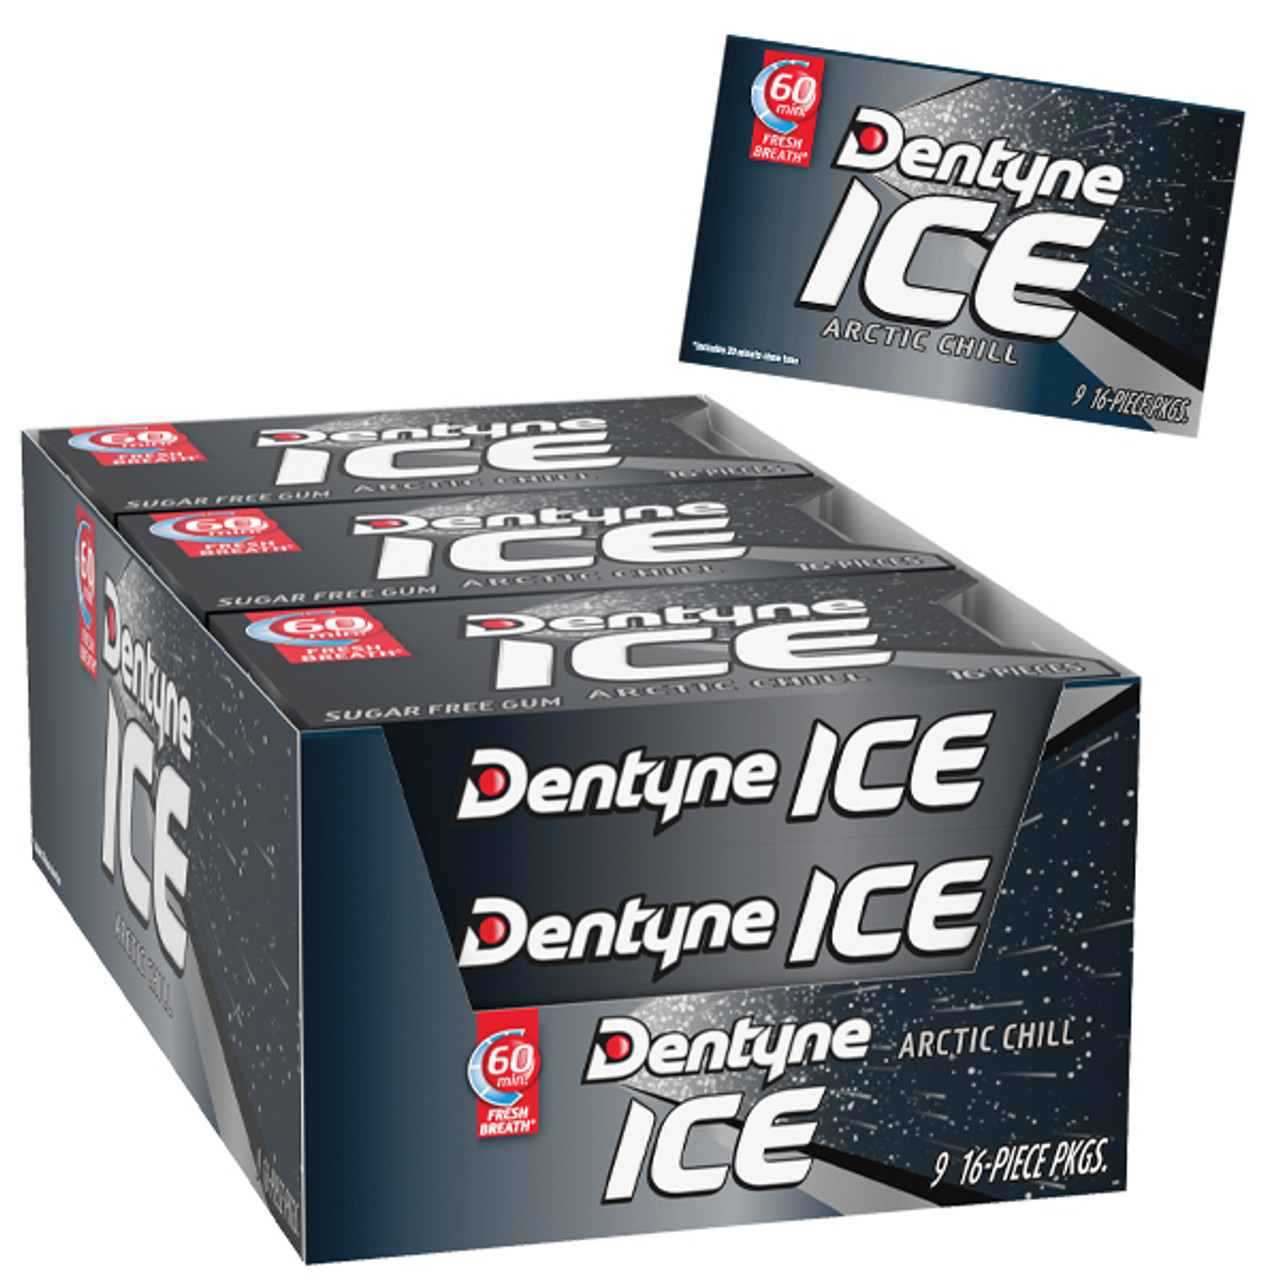 Dentyne Ice Gum - Arctic Chill - 9ct Display Box